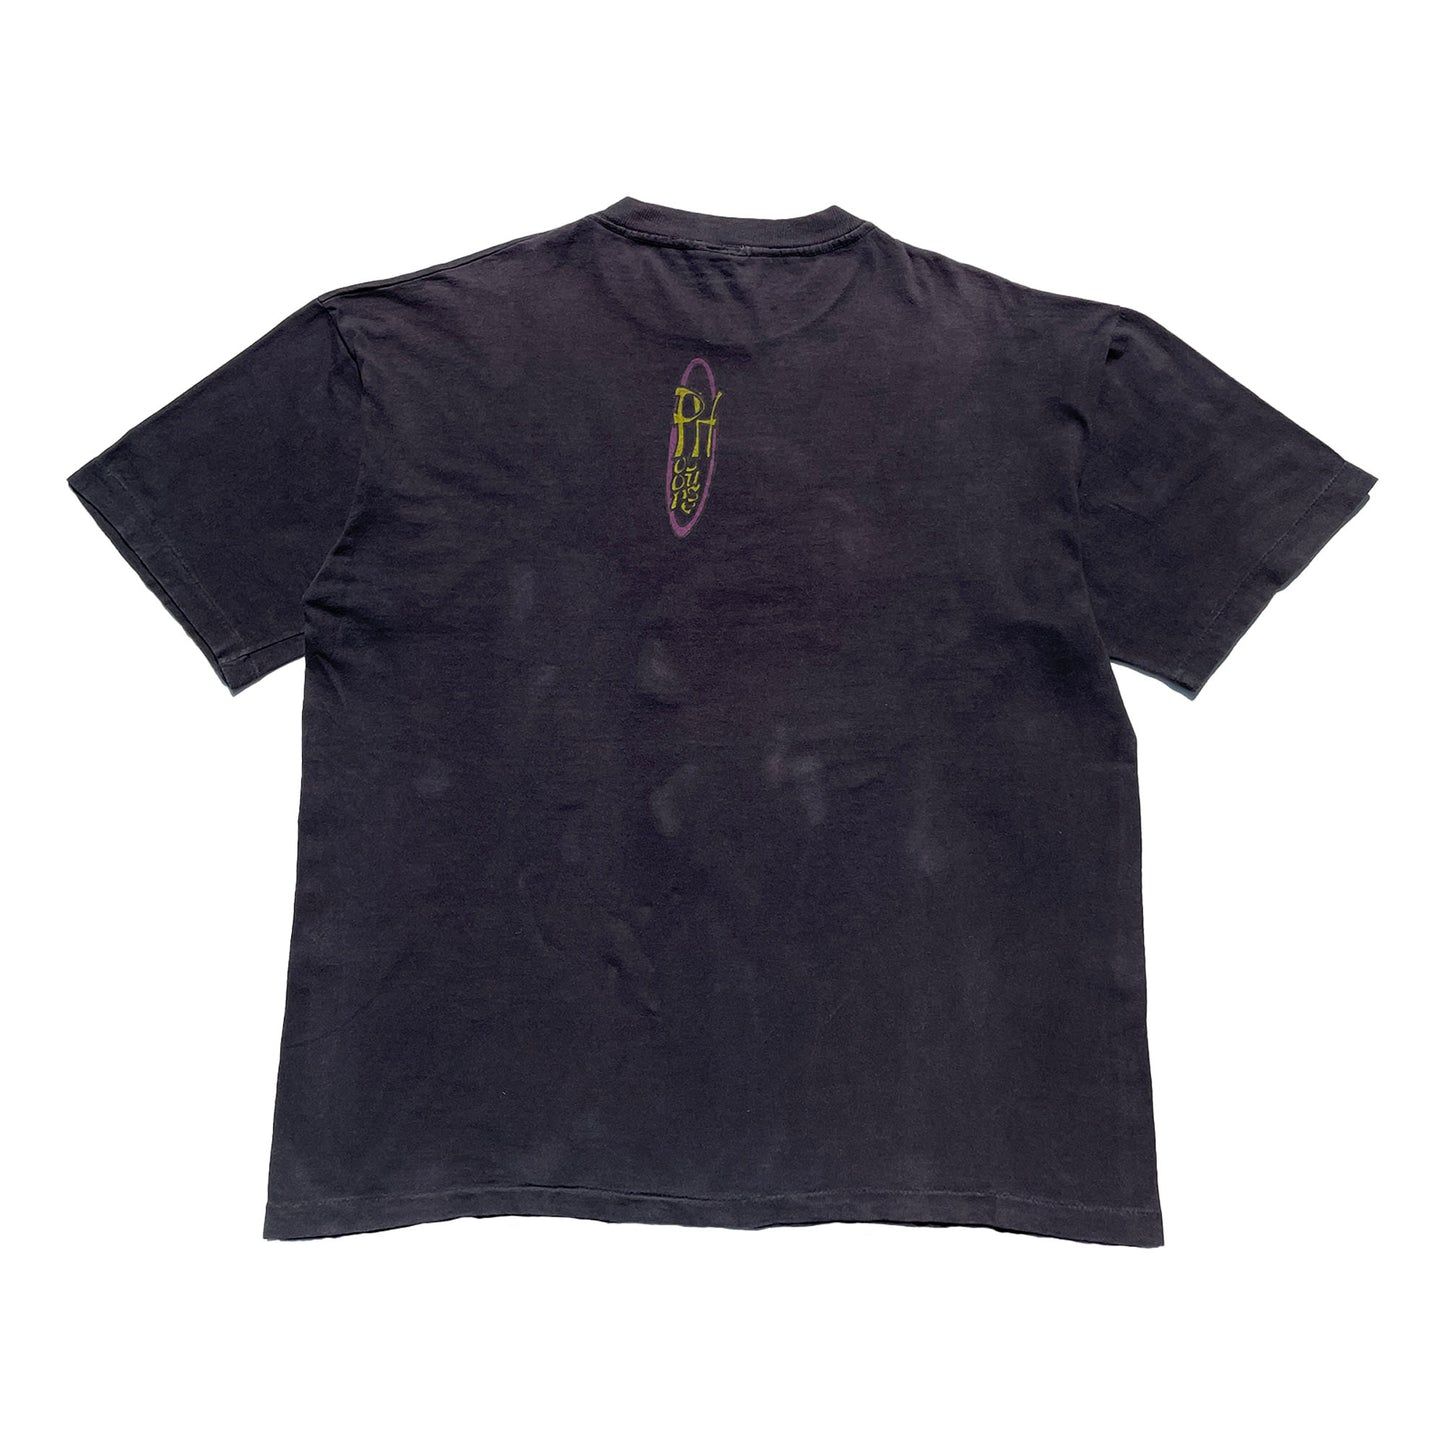 Poorhouse Skateboards "Josh Swindell" Pro Single Stitched T-Shirt (Black) VINTAGE 90s